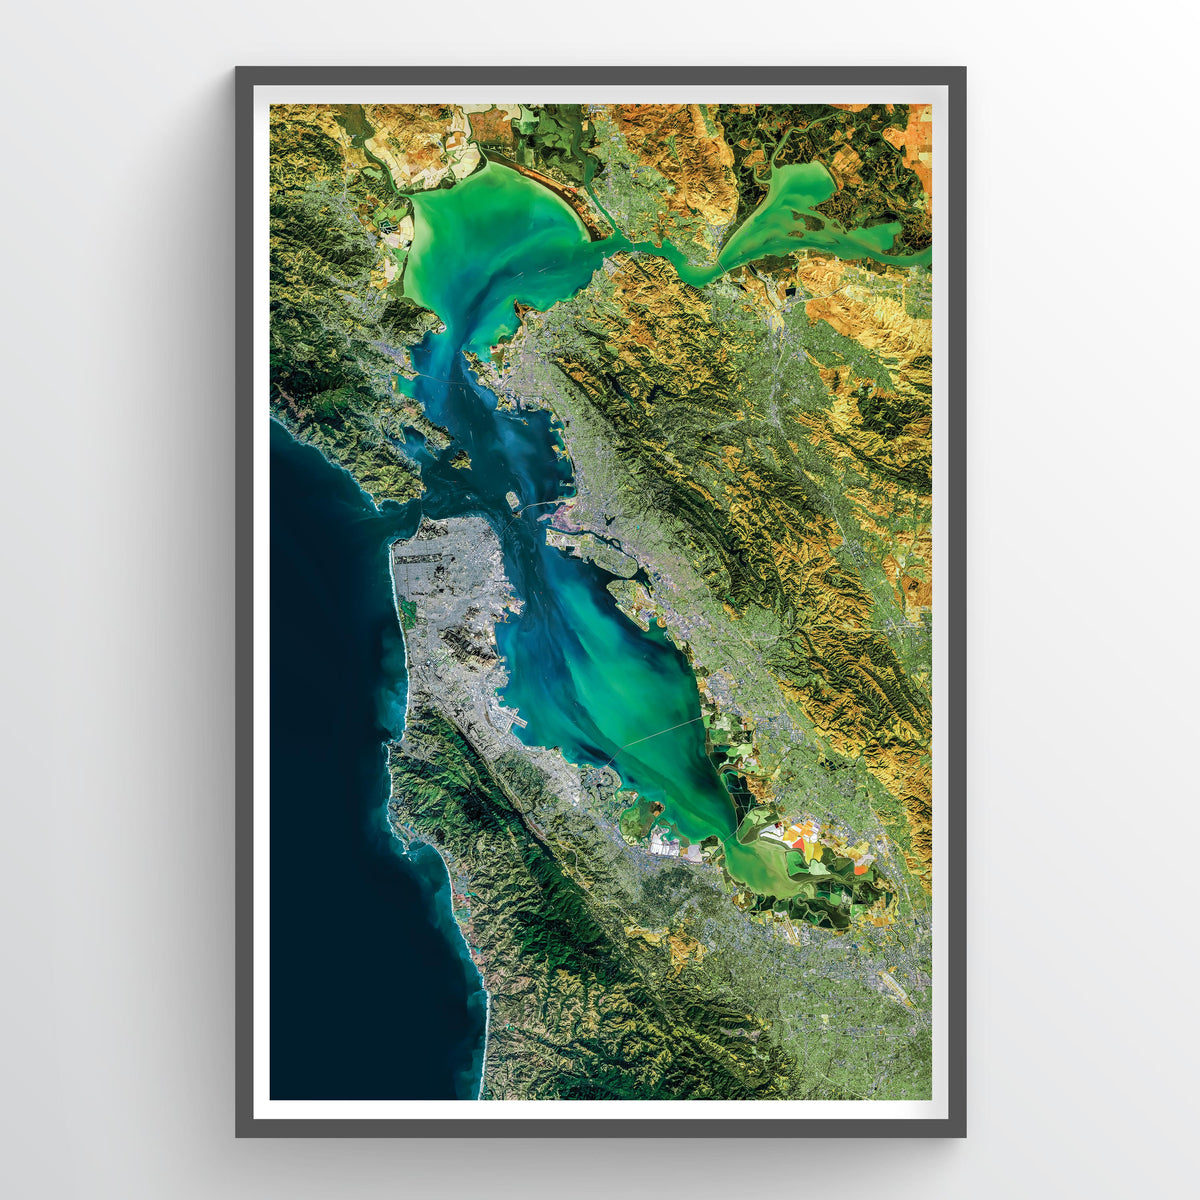 San Francisco Bay - Fine Art